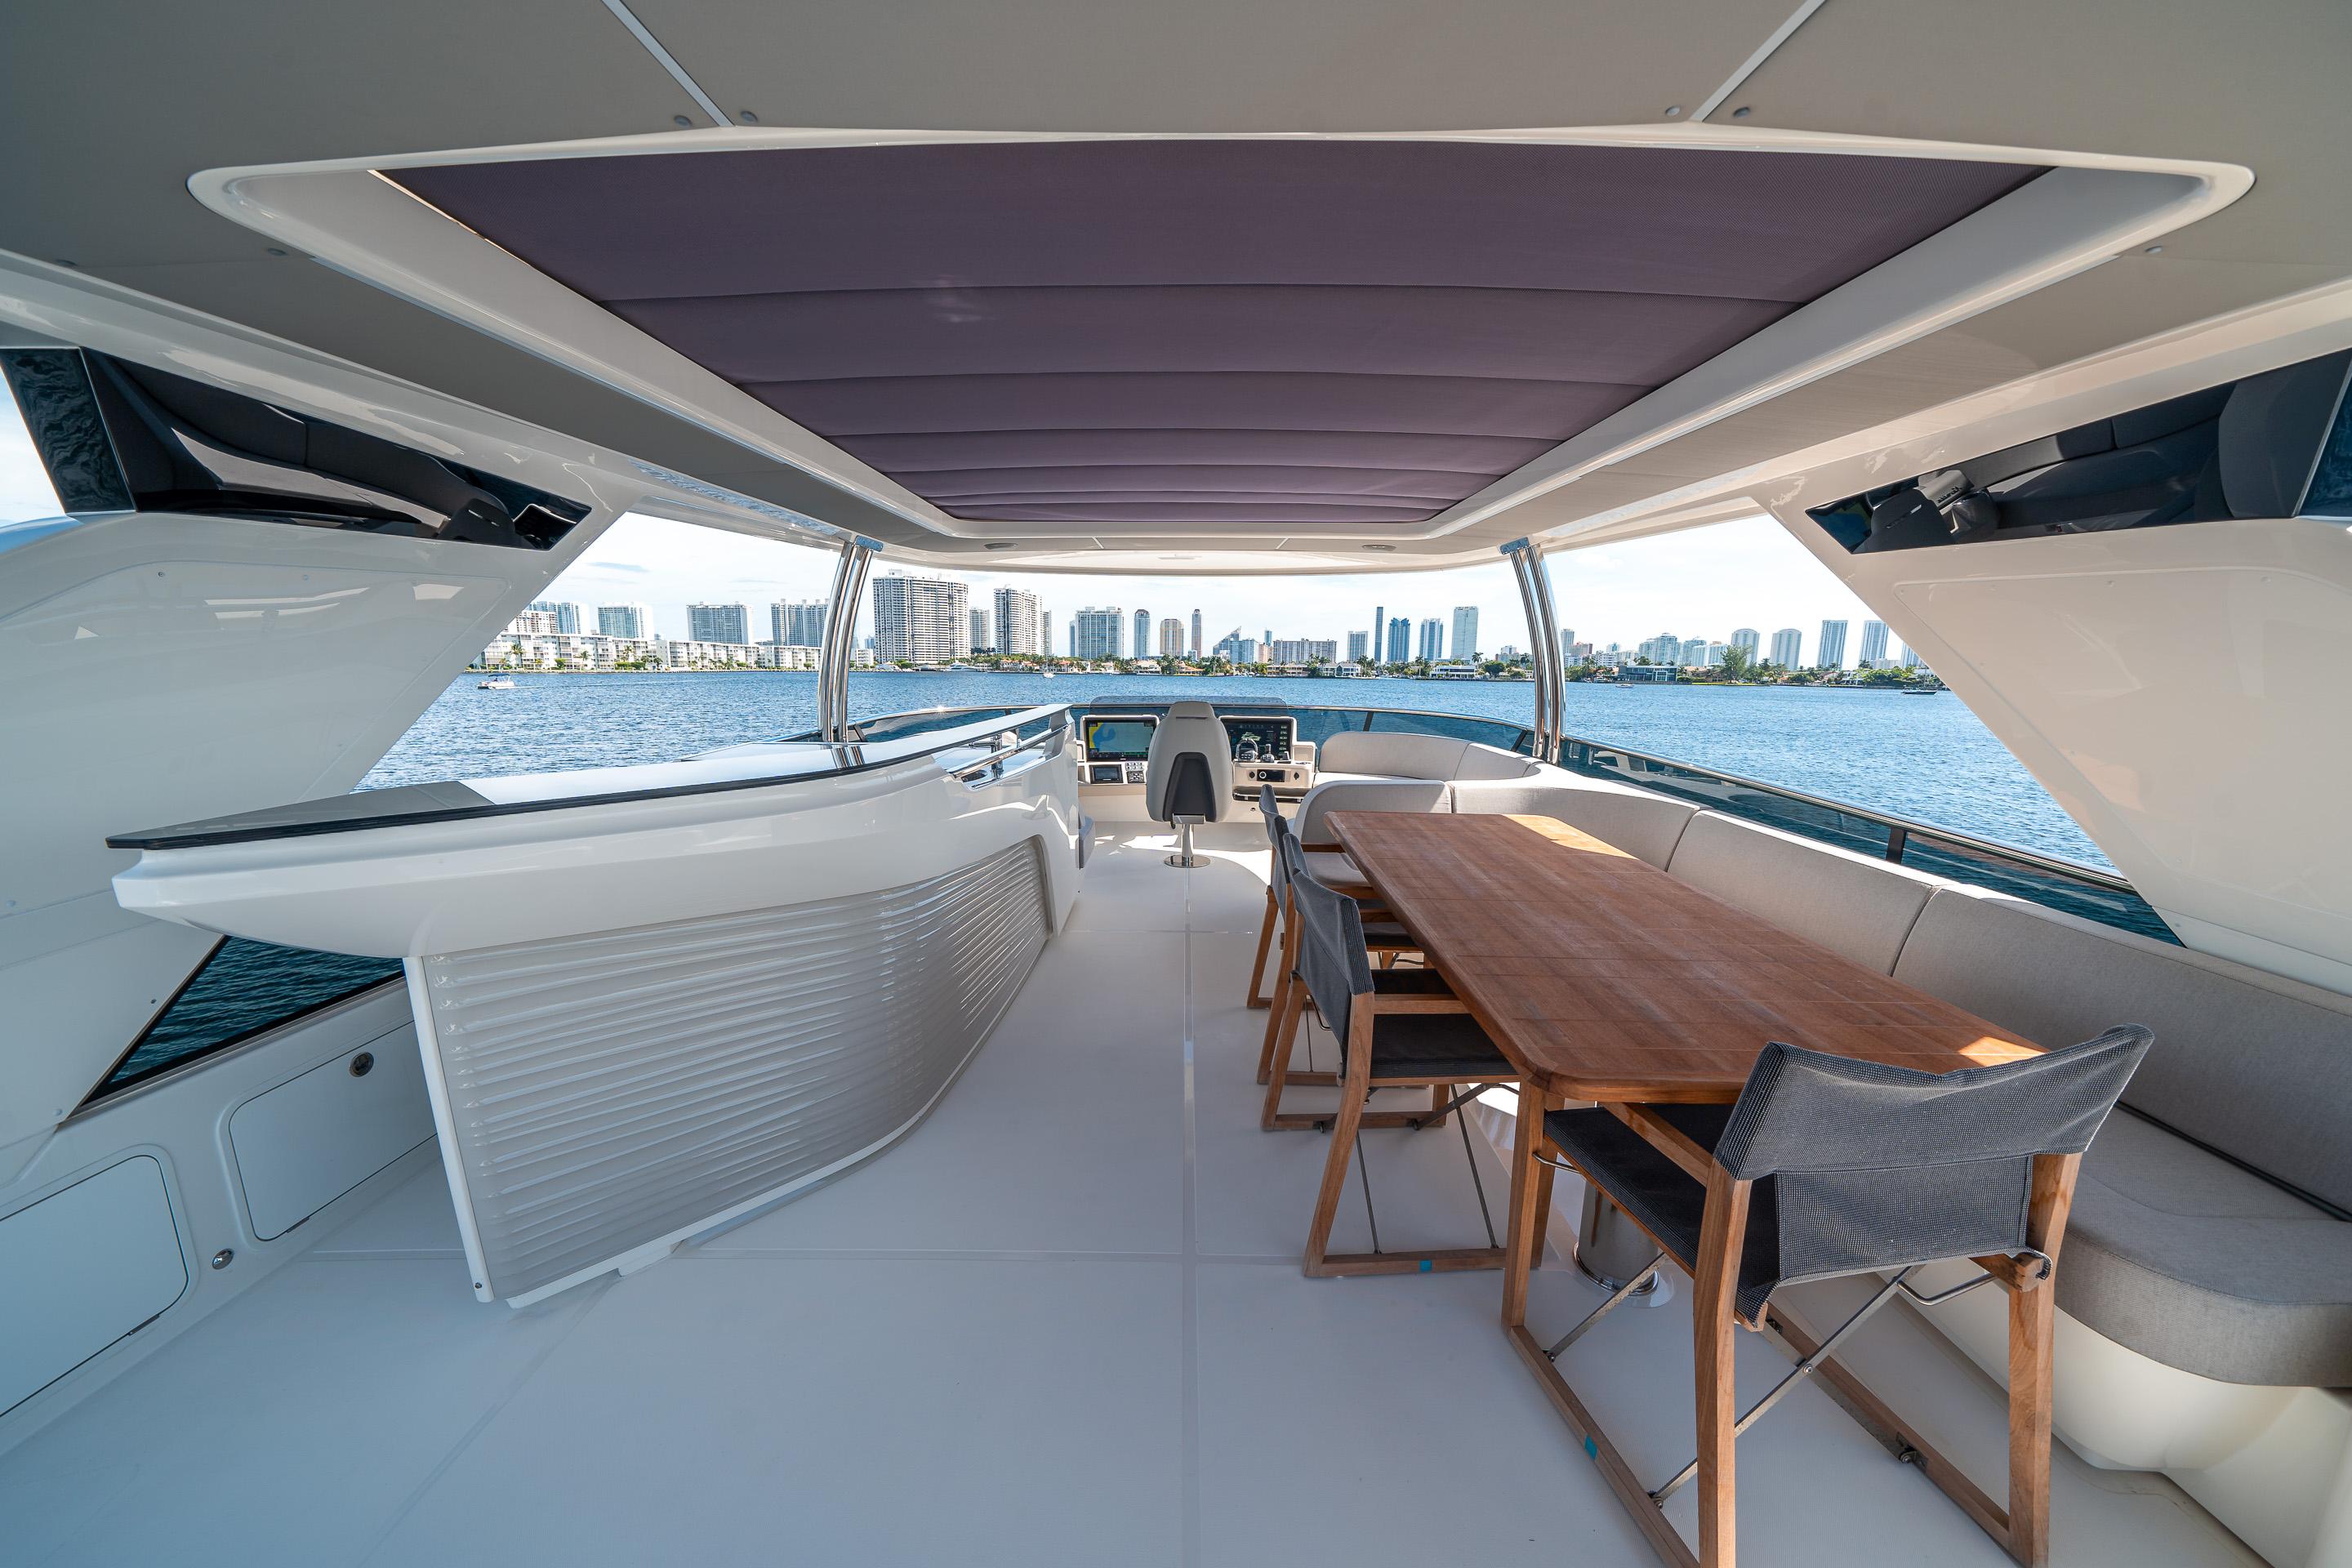 Symphony Yacht  Yacht interior design, Luxury yachts, Yacht design